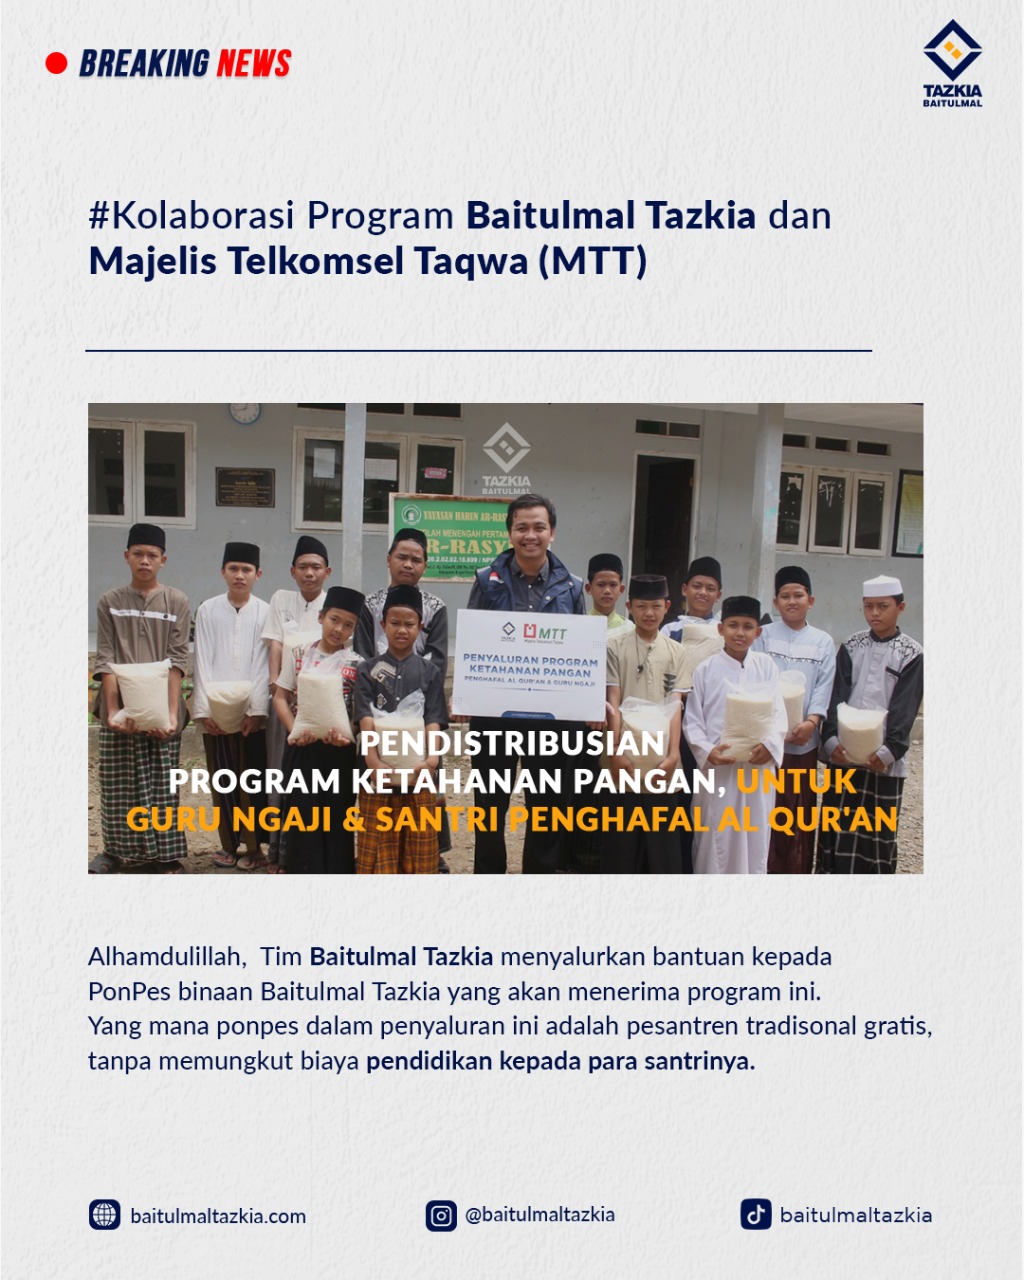 Kolaborasi Baitulmal Tazkia dan Majelis Telkomsel Taqwa Untuk Guru Ngaji dan Santri Penghafal Al Qur’an